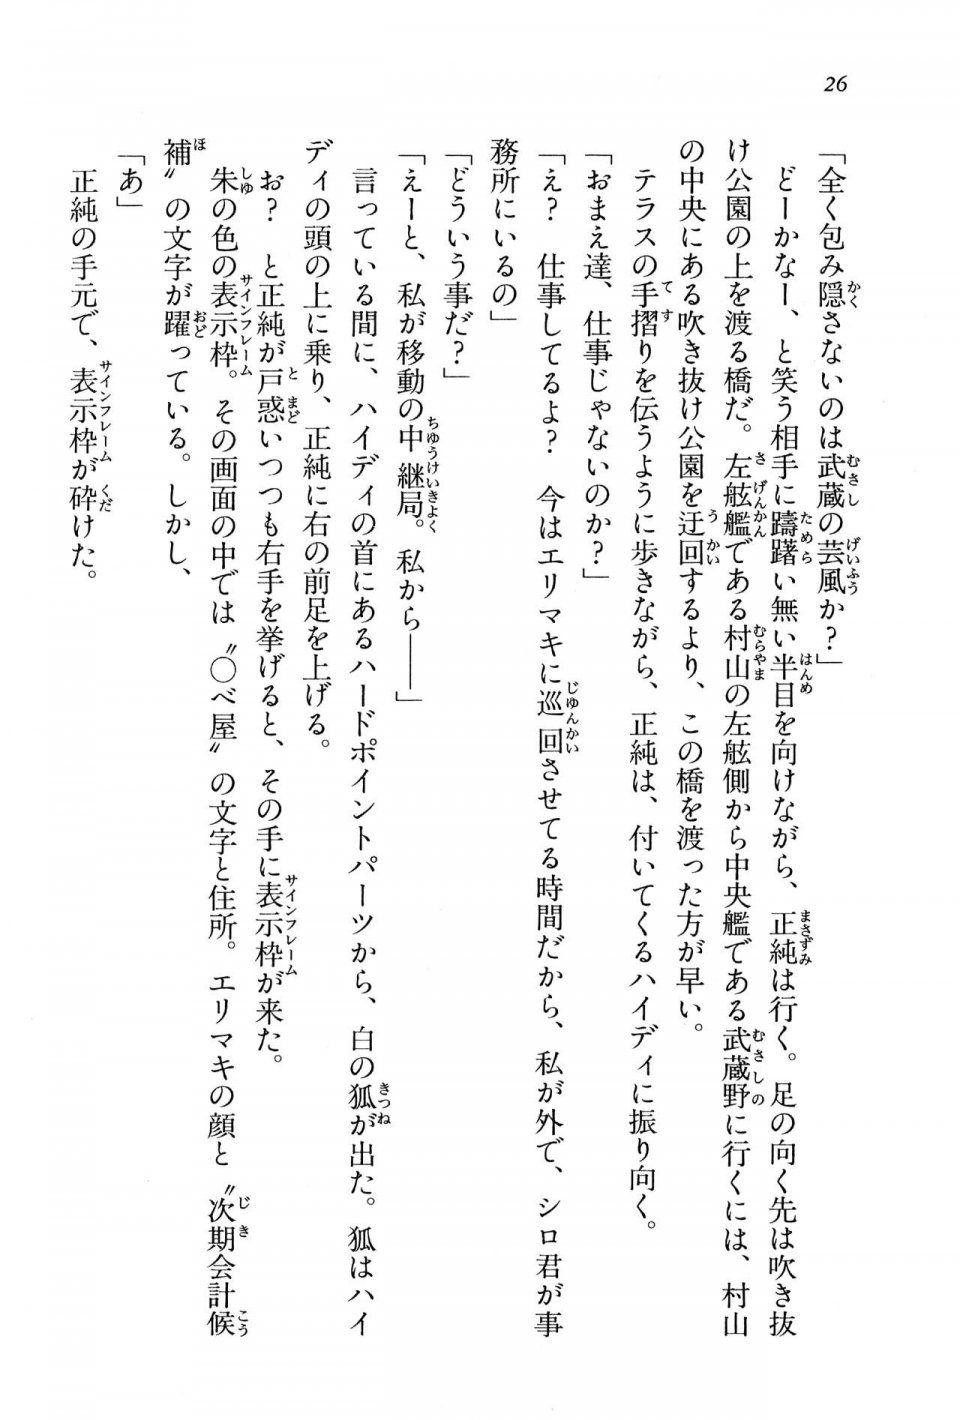 Kyoukai Senjou no Horizon BD Special Mininovel Vol 3(2A) - Photo #30